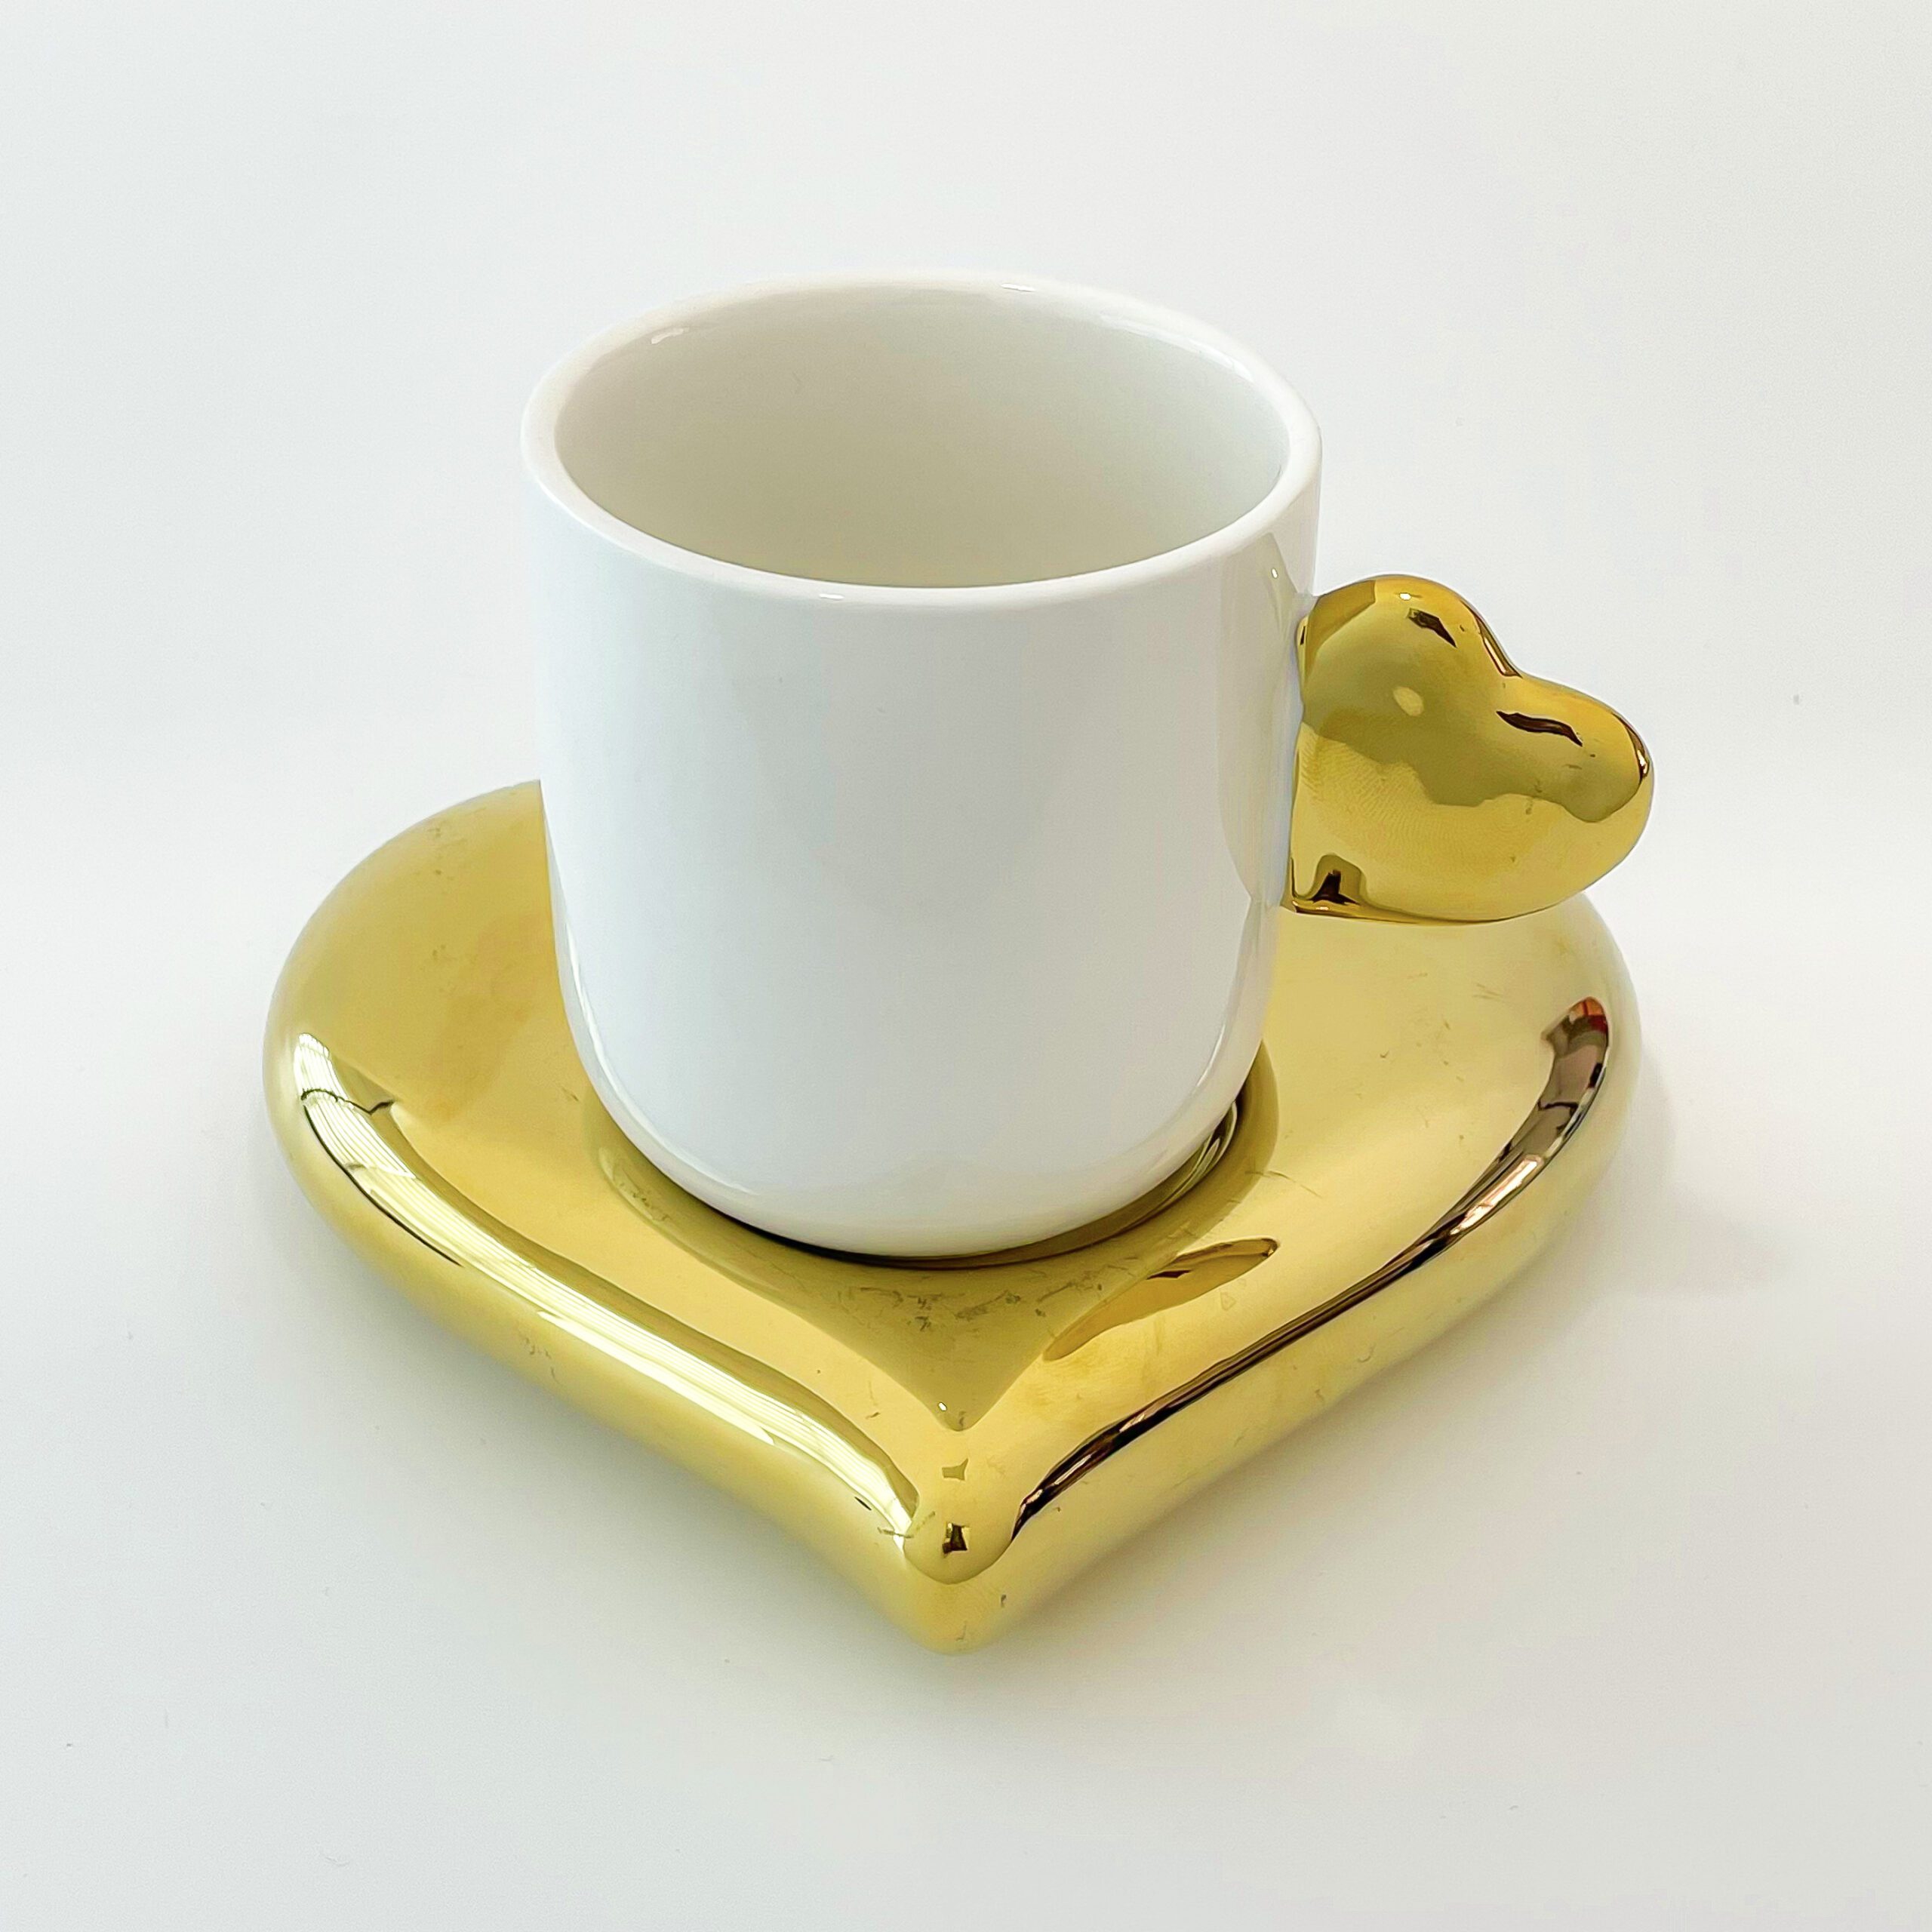 White mug with golden hear shape mug